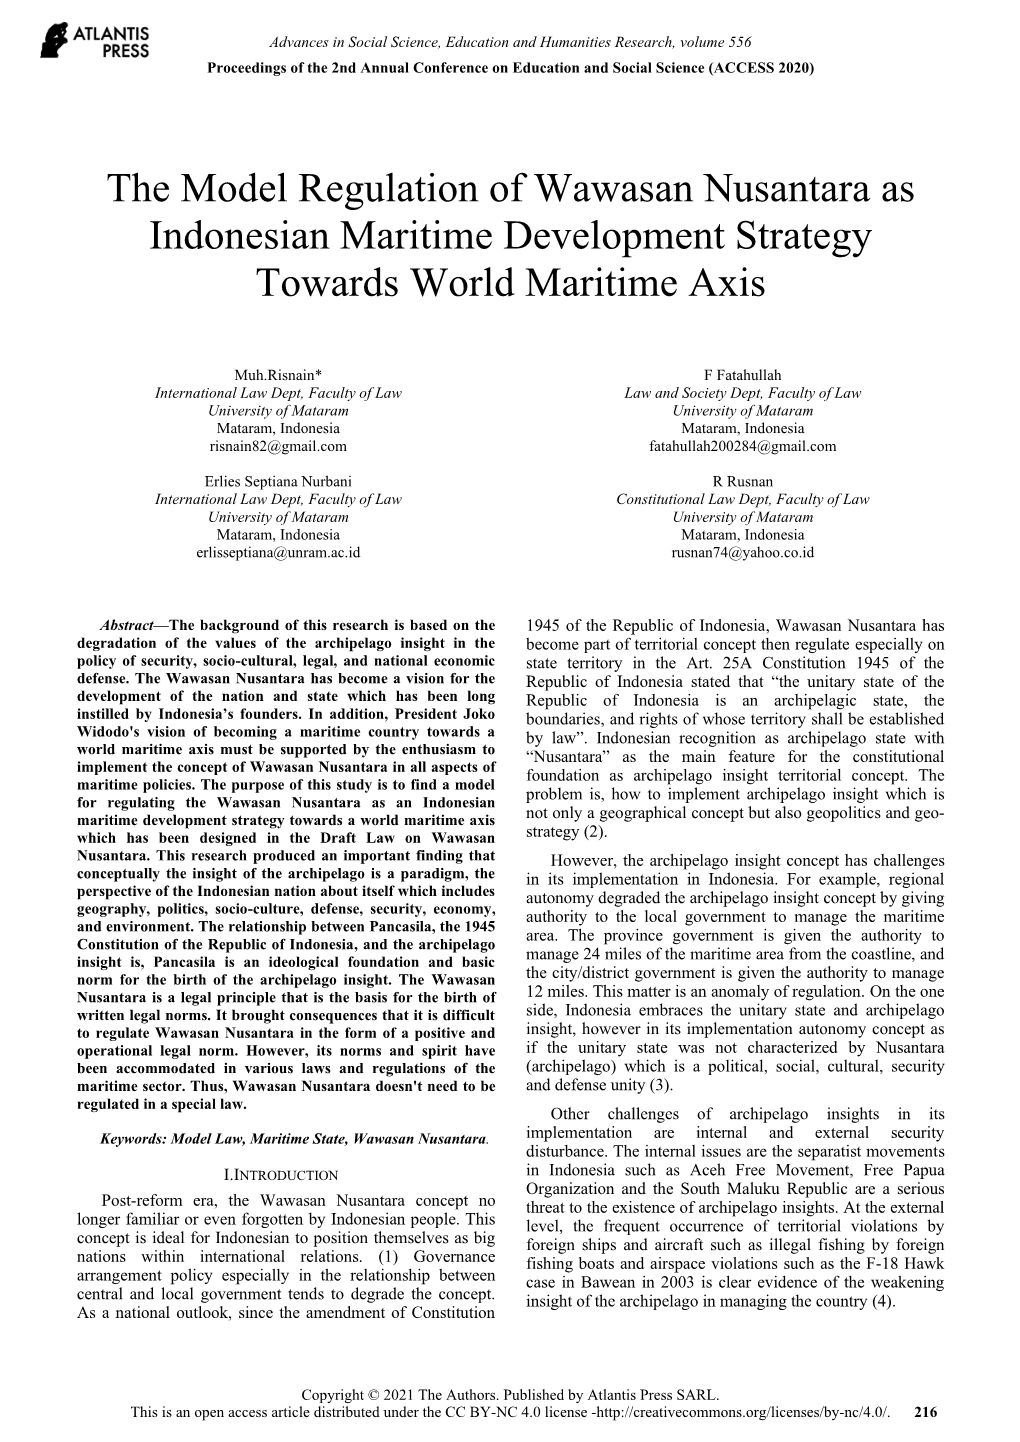 The Model Regulation of Wawasan Nusantara As Indonesian Maritime Development Strategy Towards World Maritime Axis